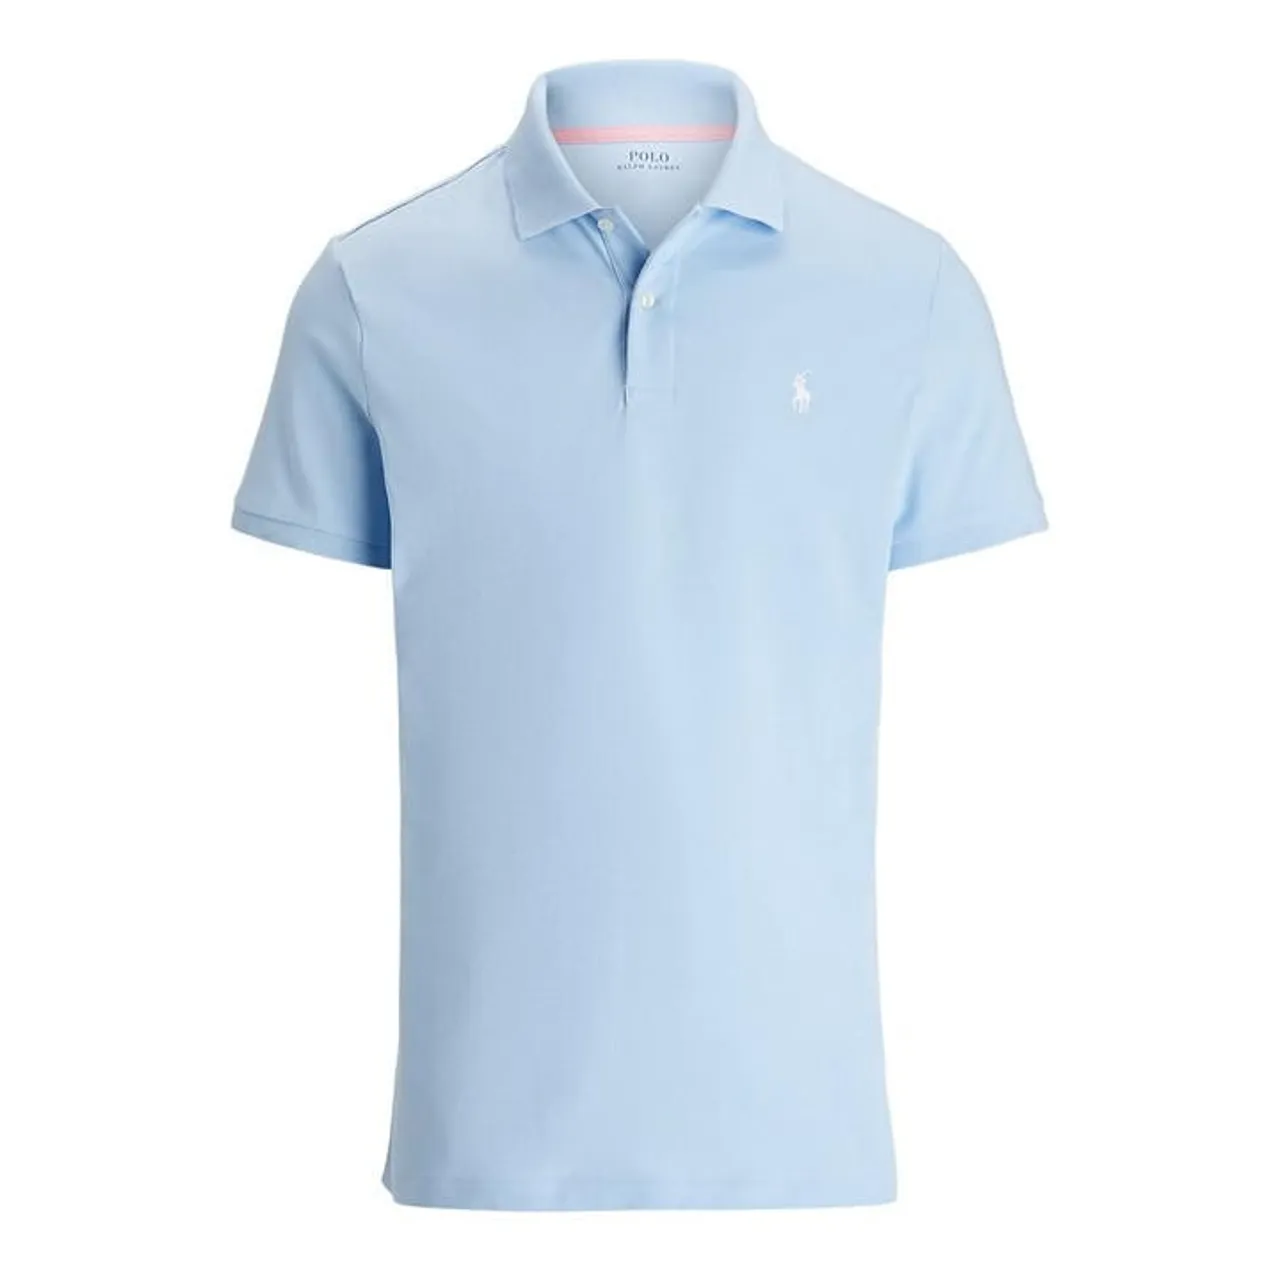 Polo Ralph Lauren Golf Performance Polo Shirt - Blue